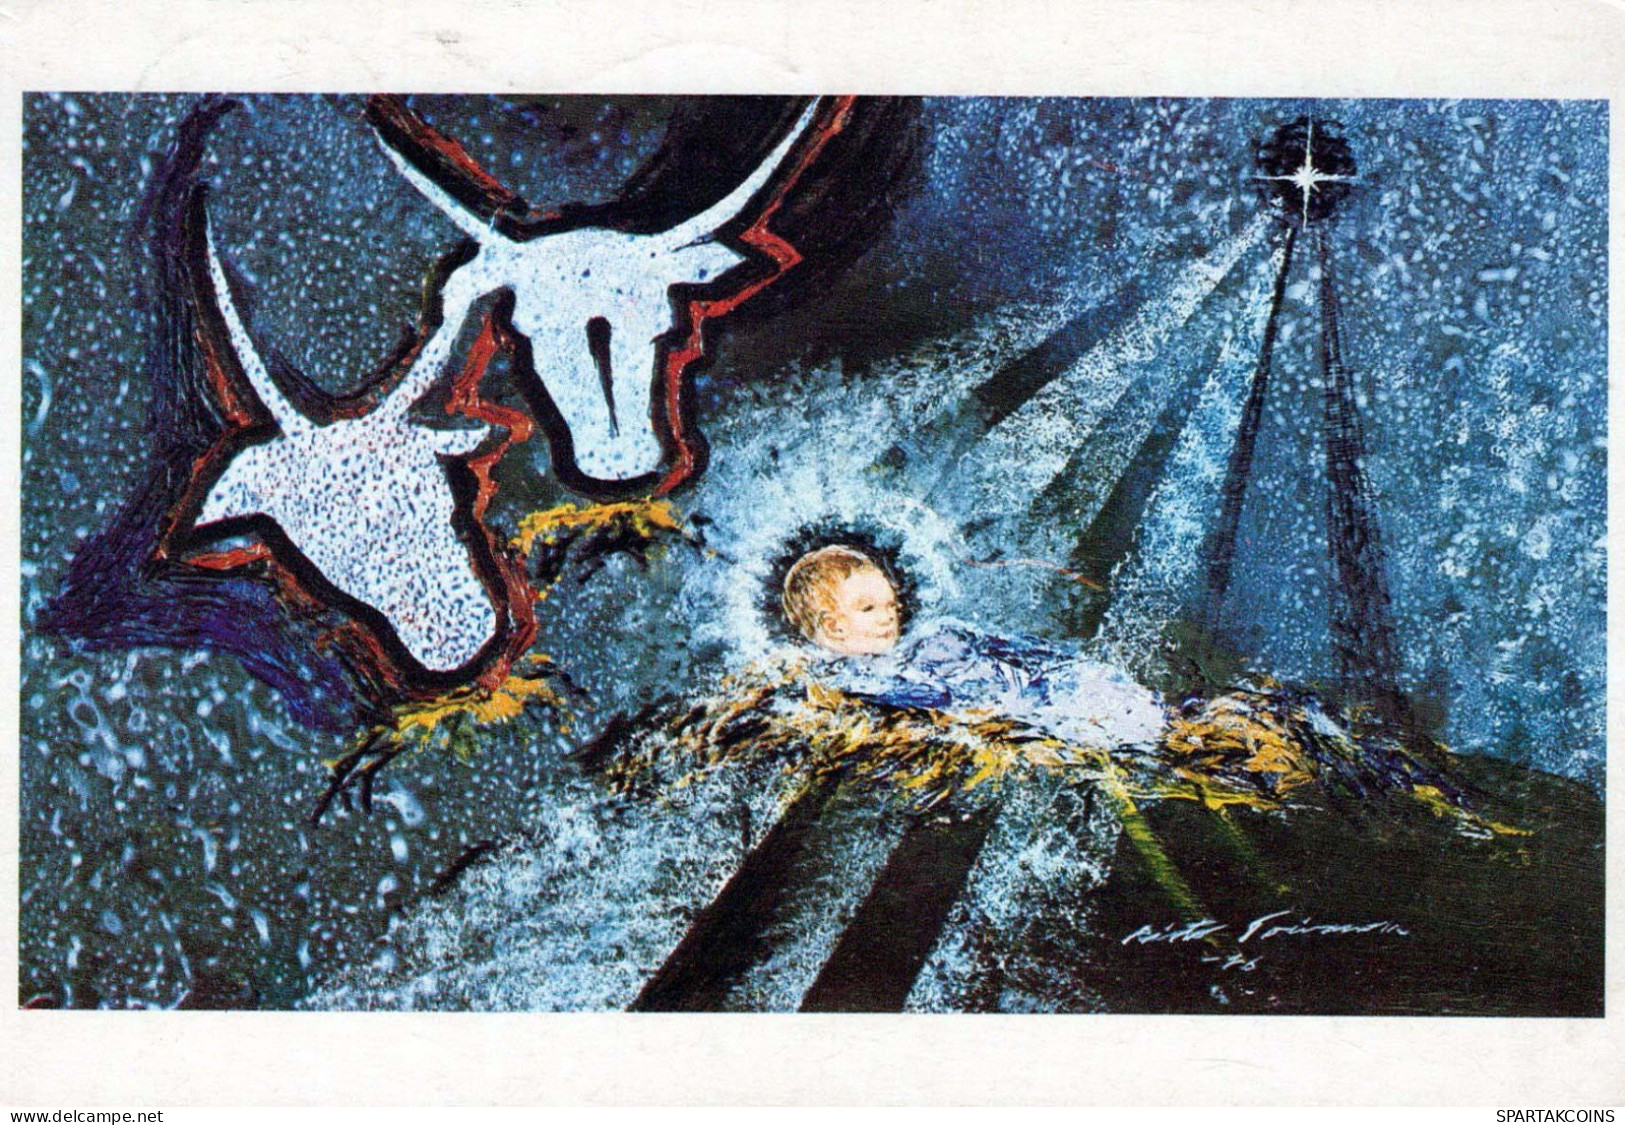 CRISTO SANTO Gesù Bambino Natale Religione Vintage Cartolina CPSM #PBP694.A - Jezus